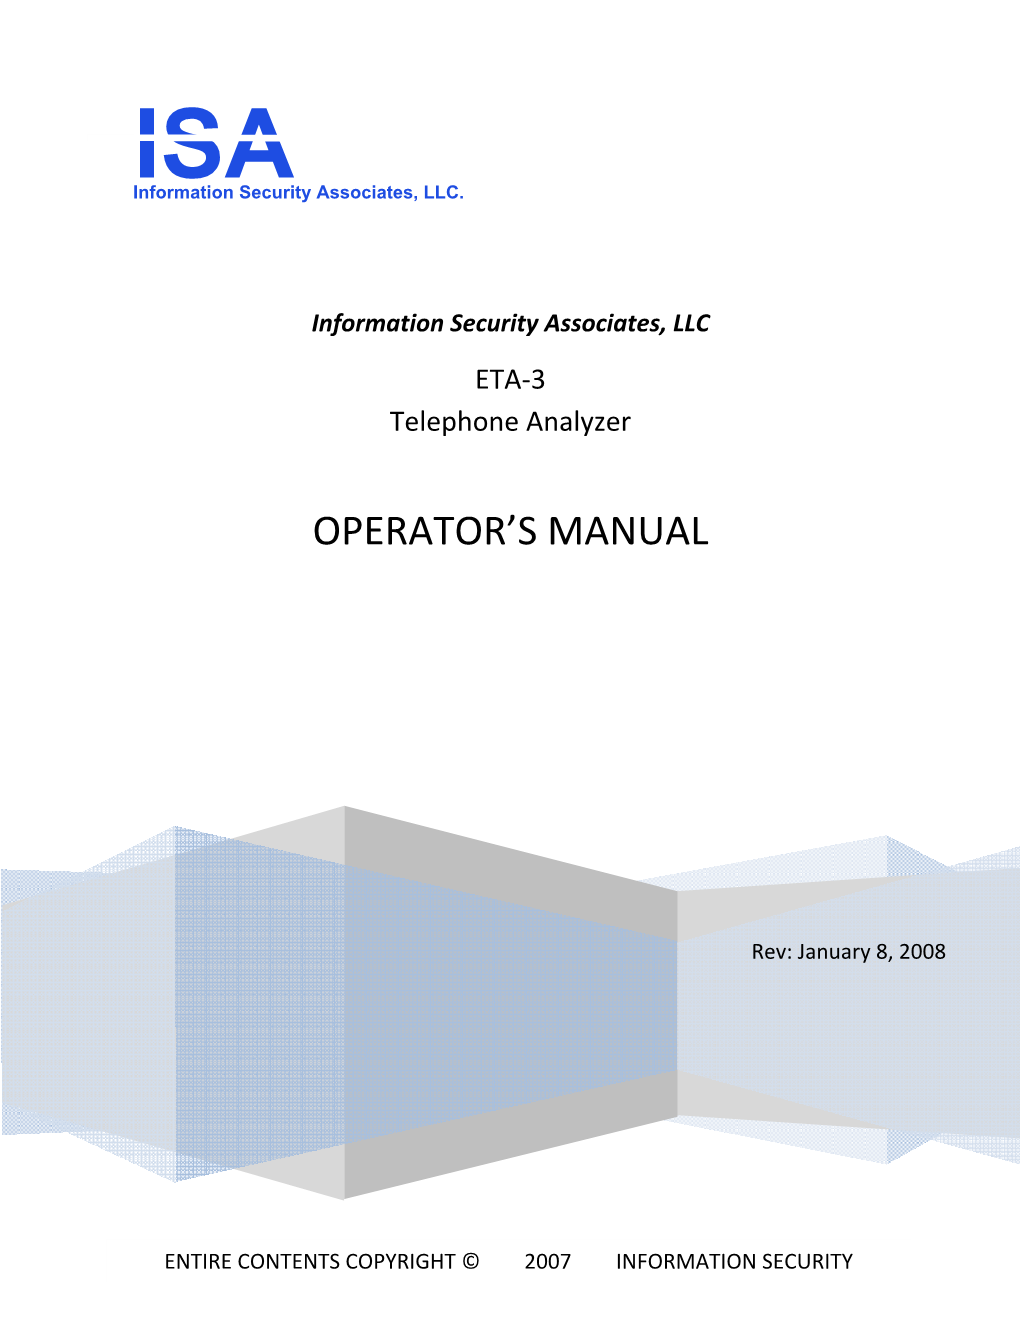 ETA-3 Telephone Analyzer Operator's Manual